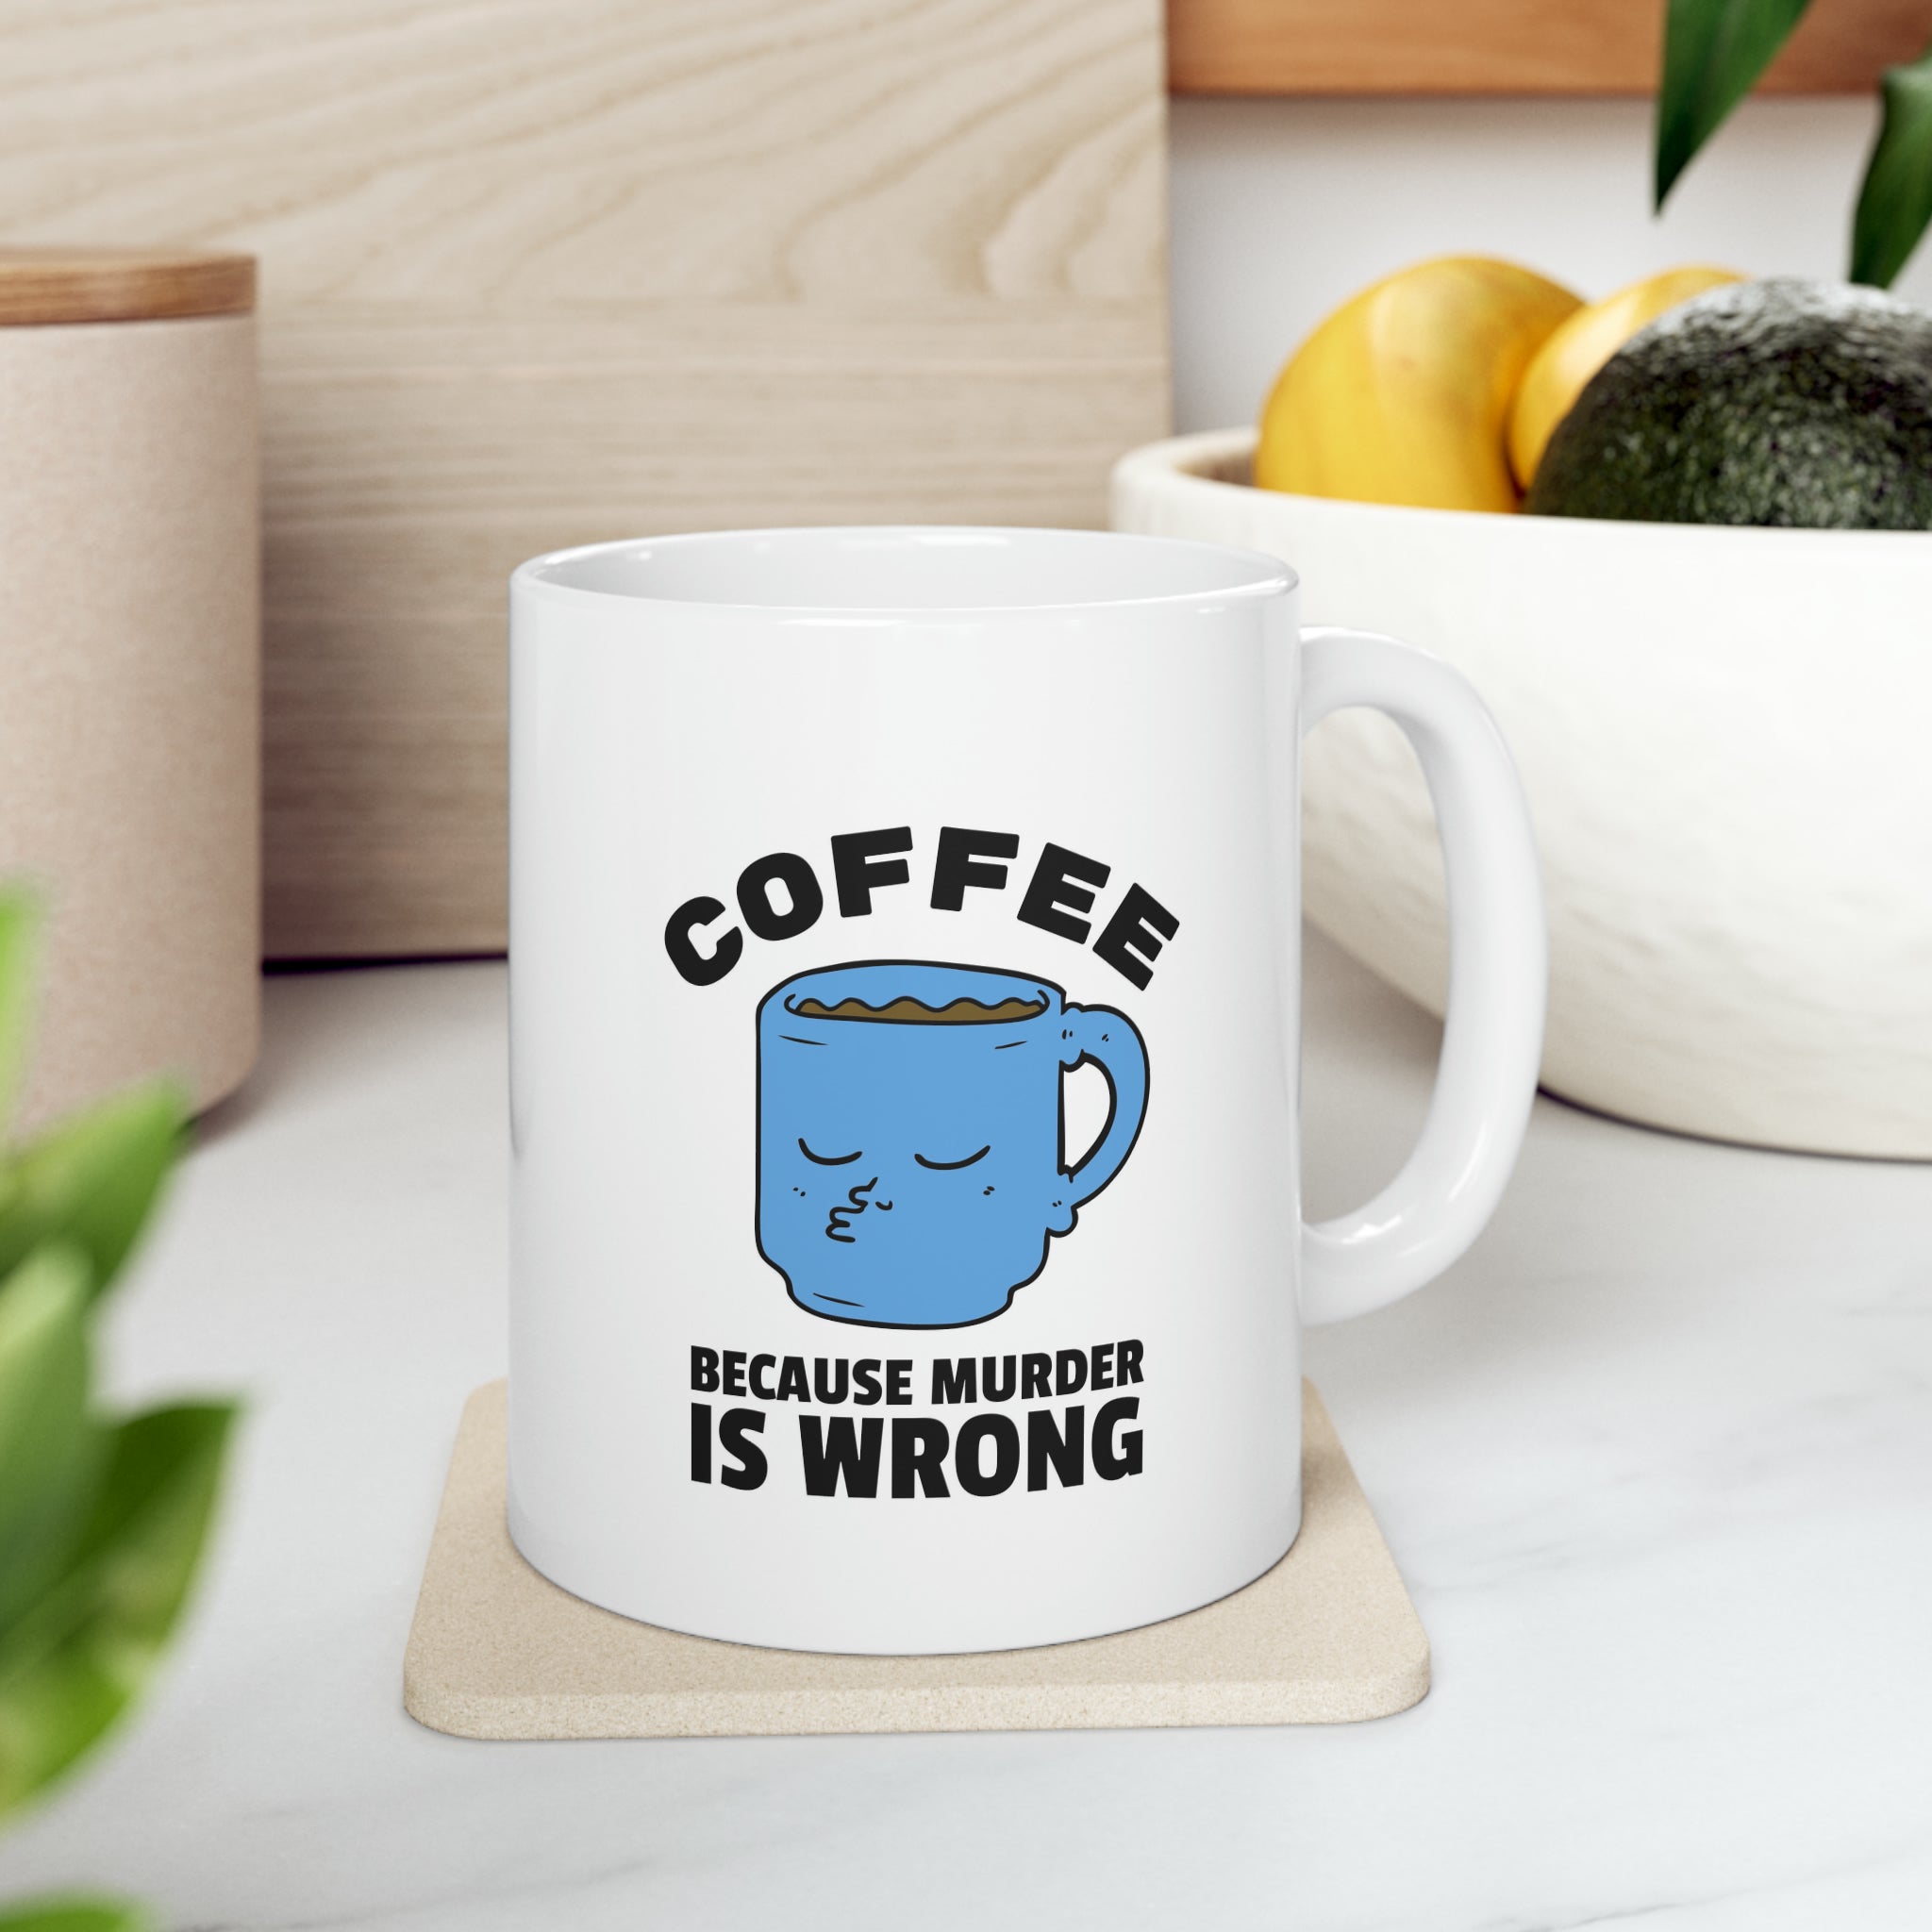 "Coffee, Because Murder Is Wrong" Funny Ceramic Mug, 11oz - The Perfect Mug for Dark Humor & Coffee Enthusiasts